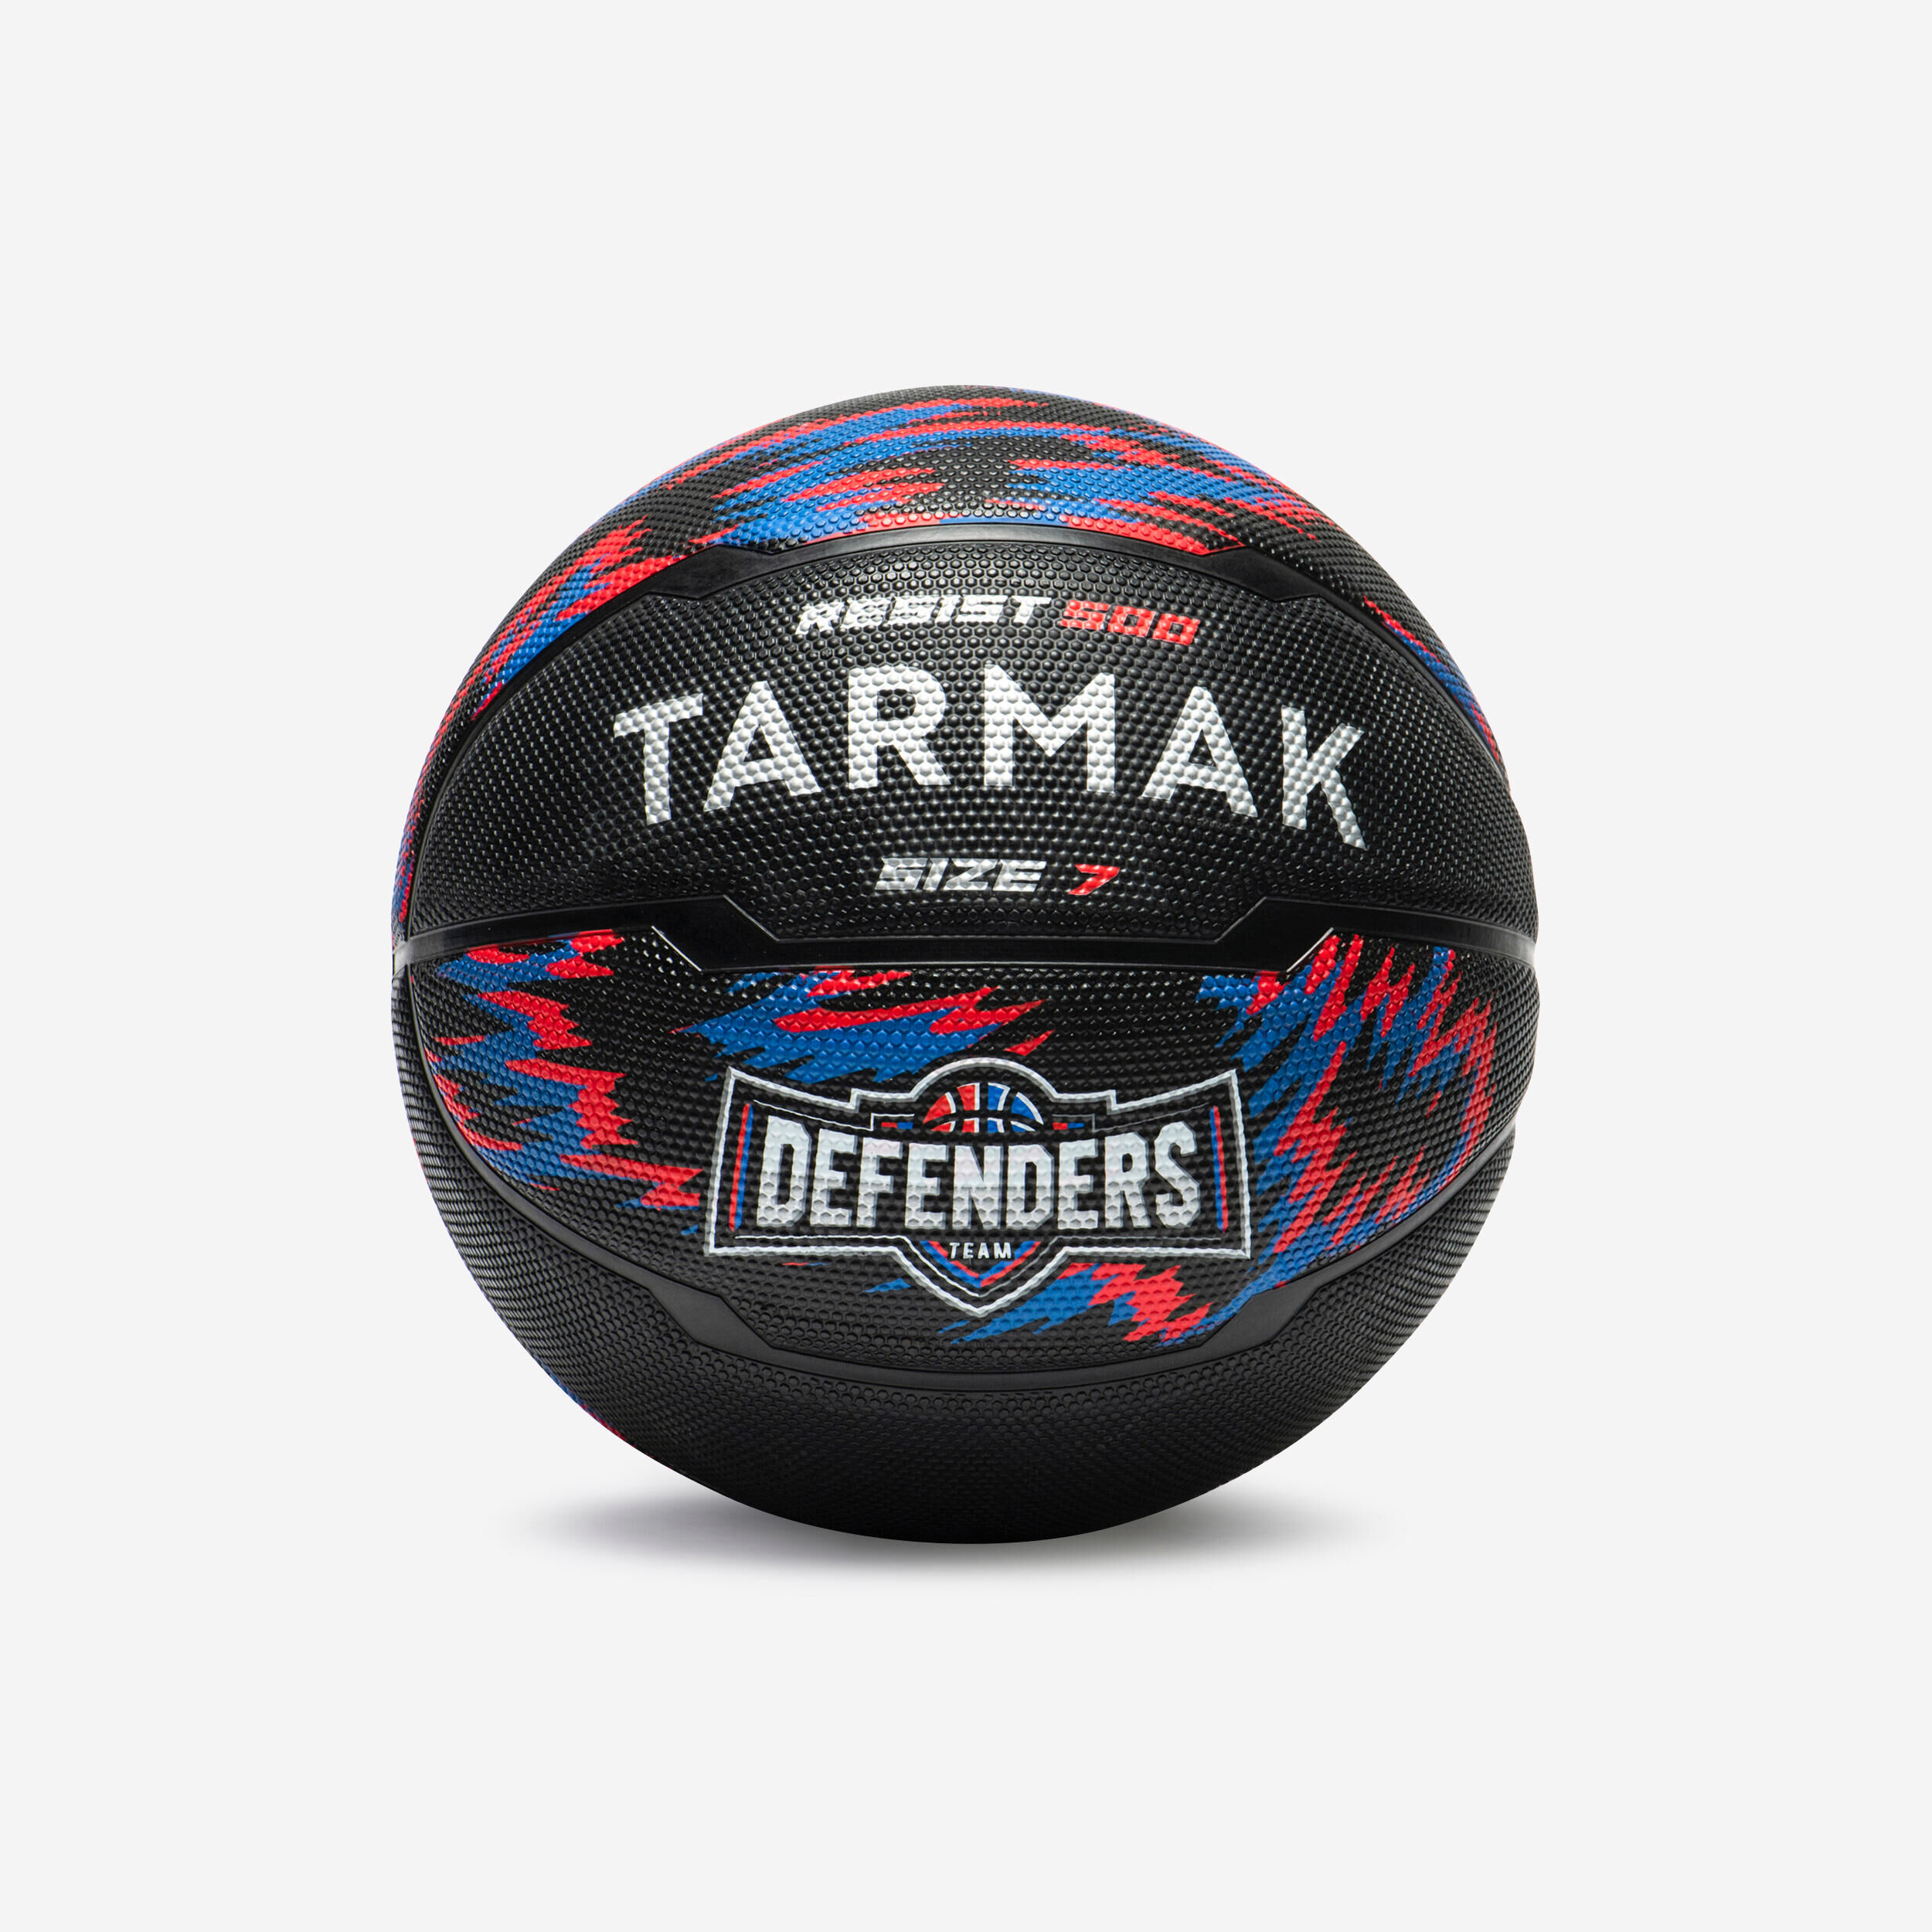 TARMAK Size 7 Basketball R500 - Black/Red/Blue